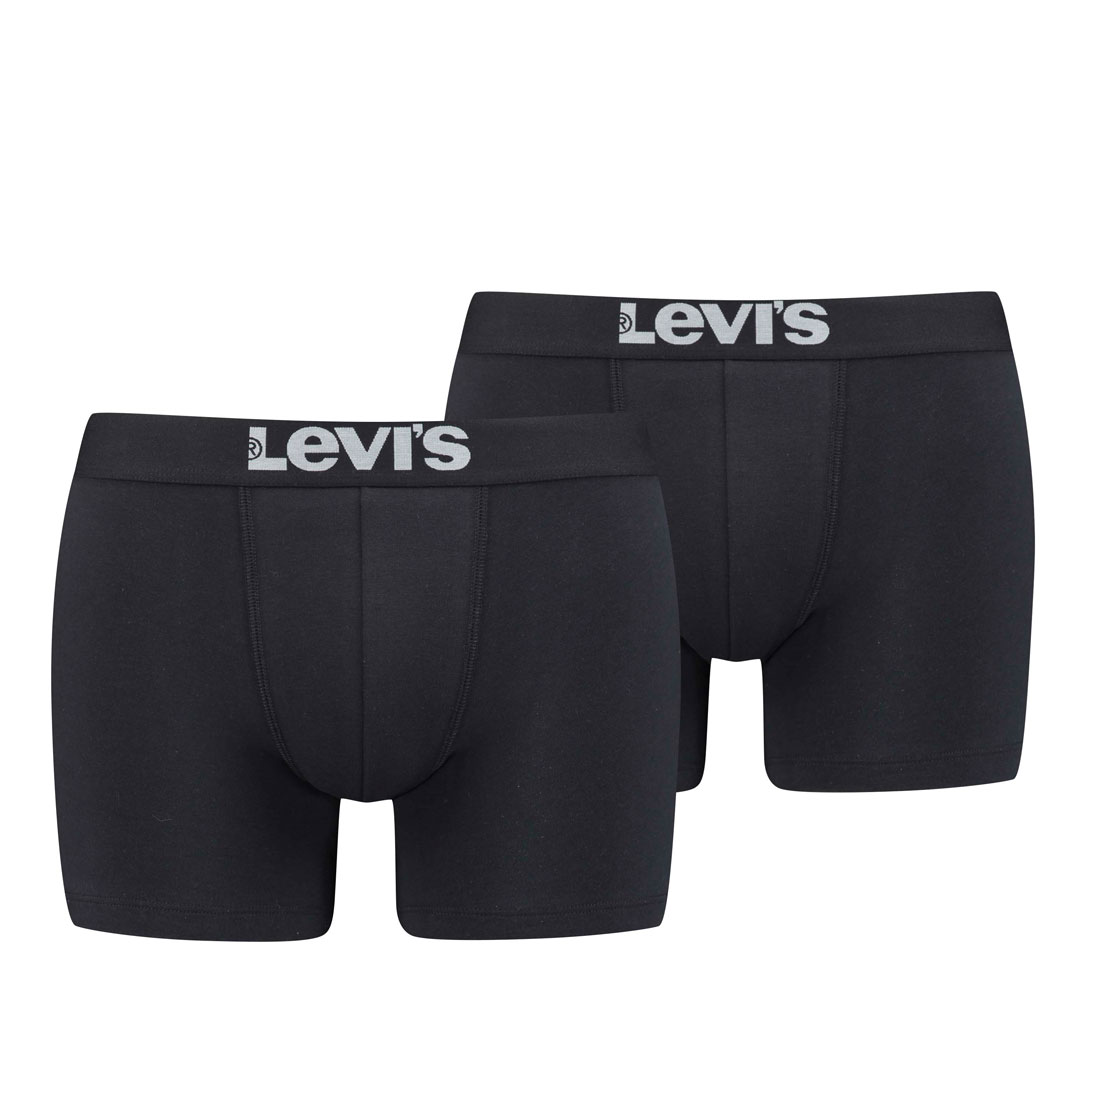 Levi's Herren Levis Men SOLID Basic Boxer 2P Boxershorts, Schwarz (Jet Black 884), Medium (Herstellergröße: 020) (2er Pack)